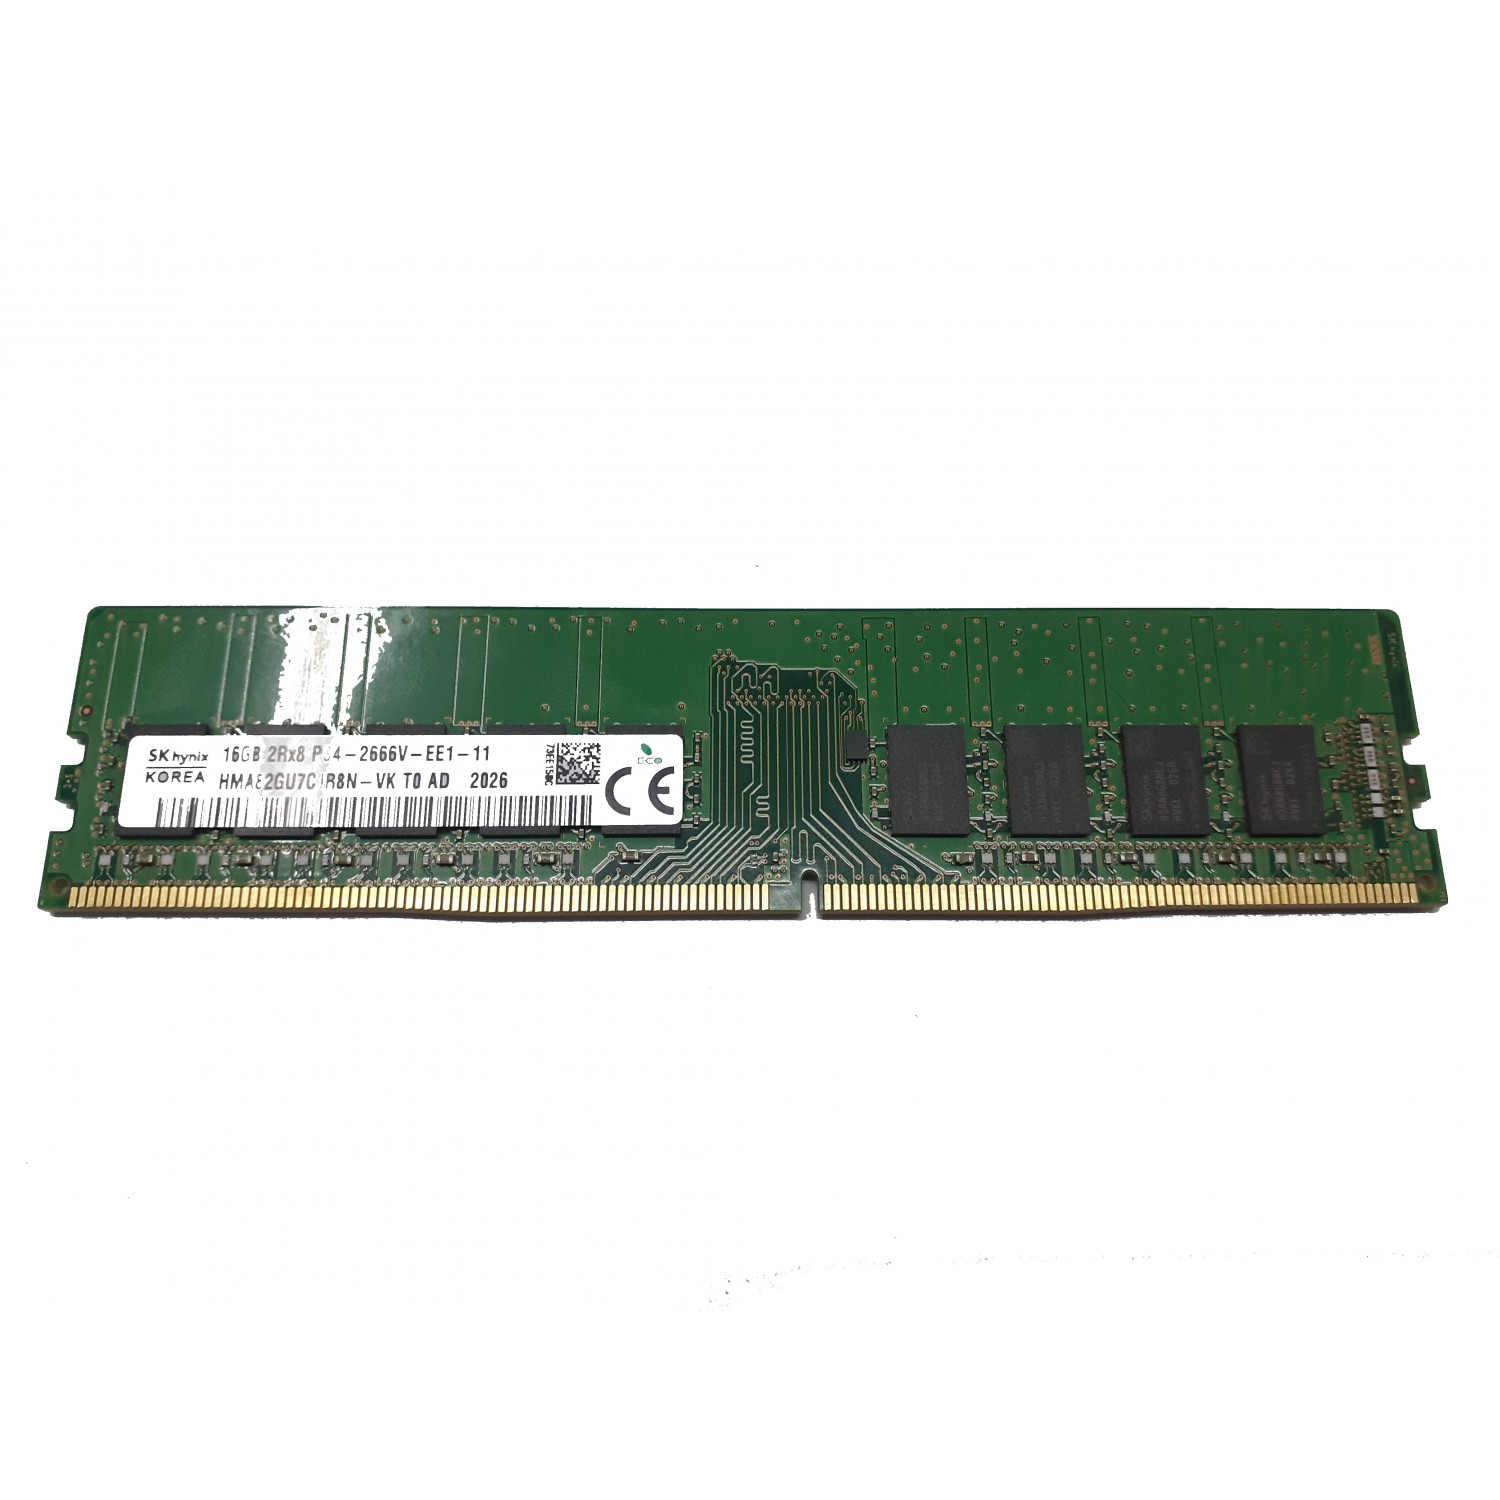 Memorie server 16GB 2RX8 PC4-2666V-EE1-11